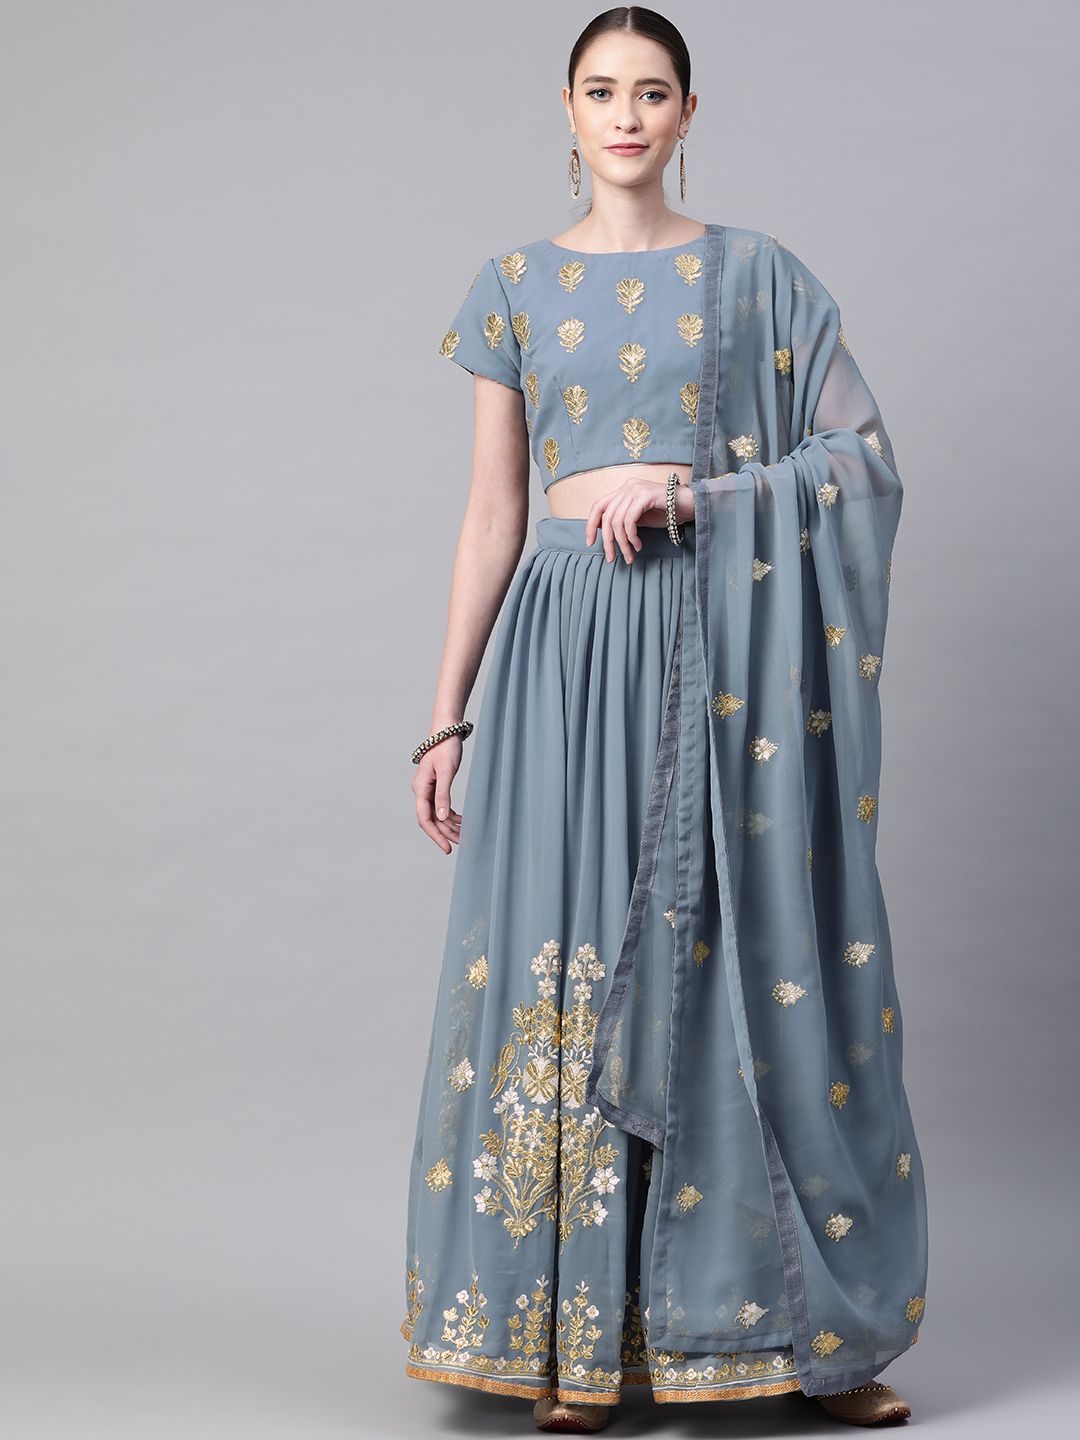 Readiprint Fashions Grey & Golden Embellished Semi-Stitched Lehenga & Blouse with Dupatta Price in India